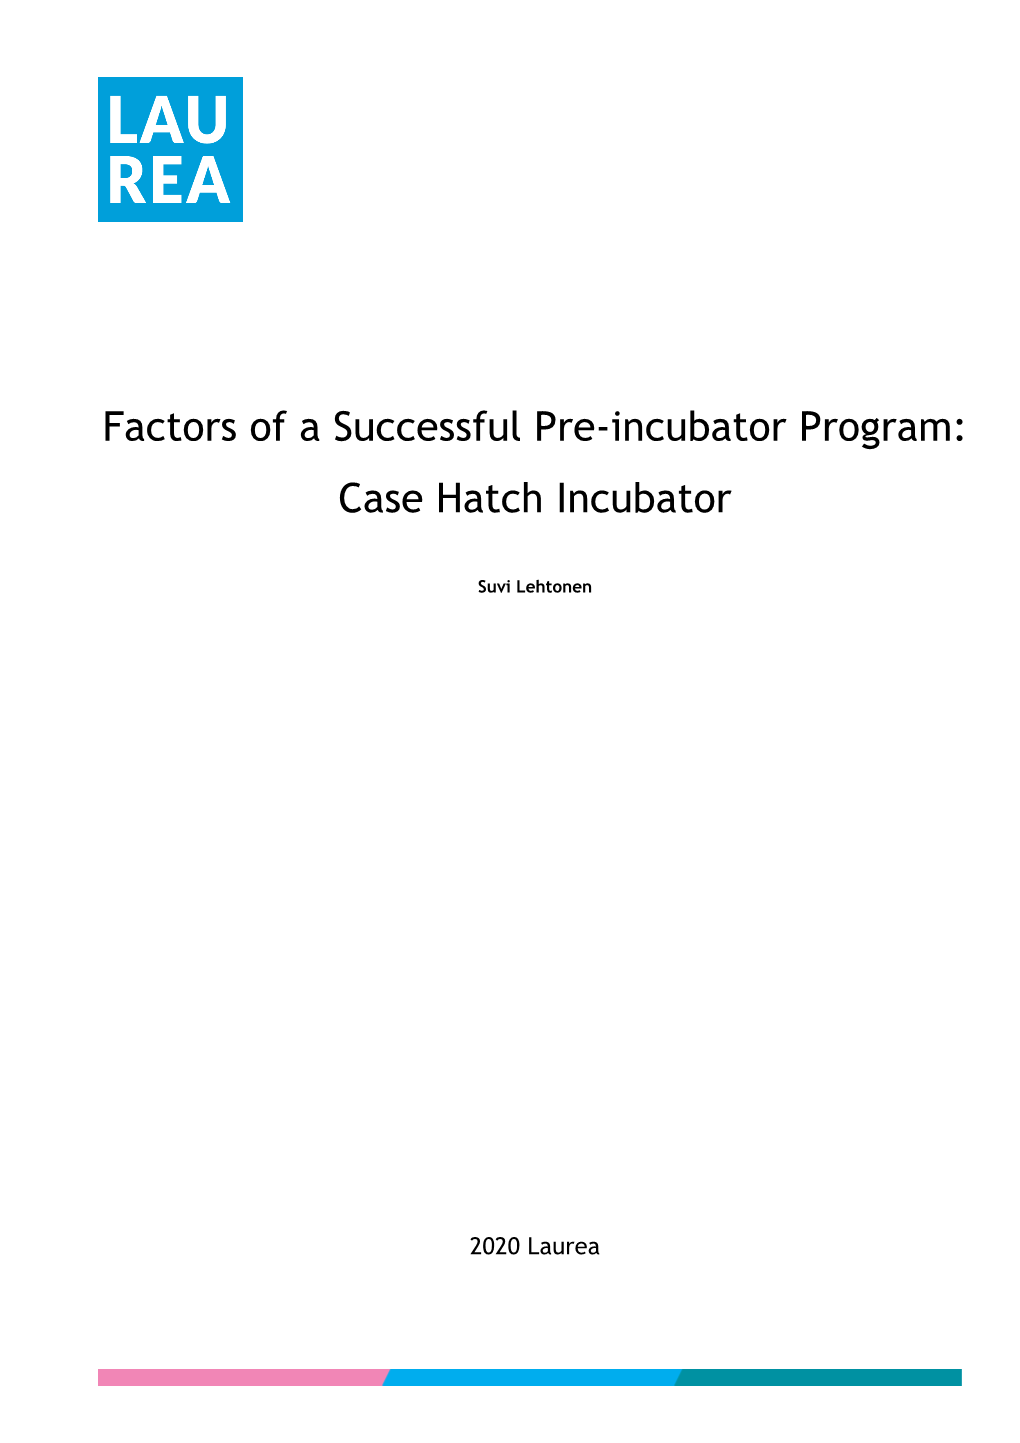 Case Hatch Incubator